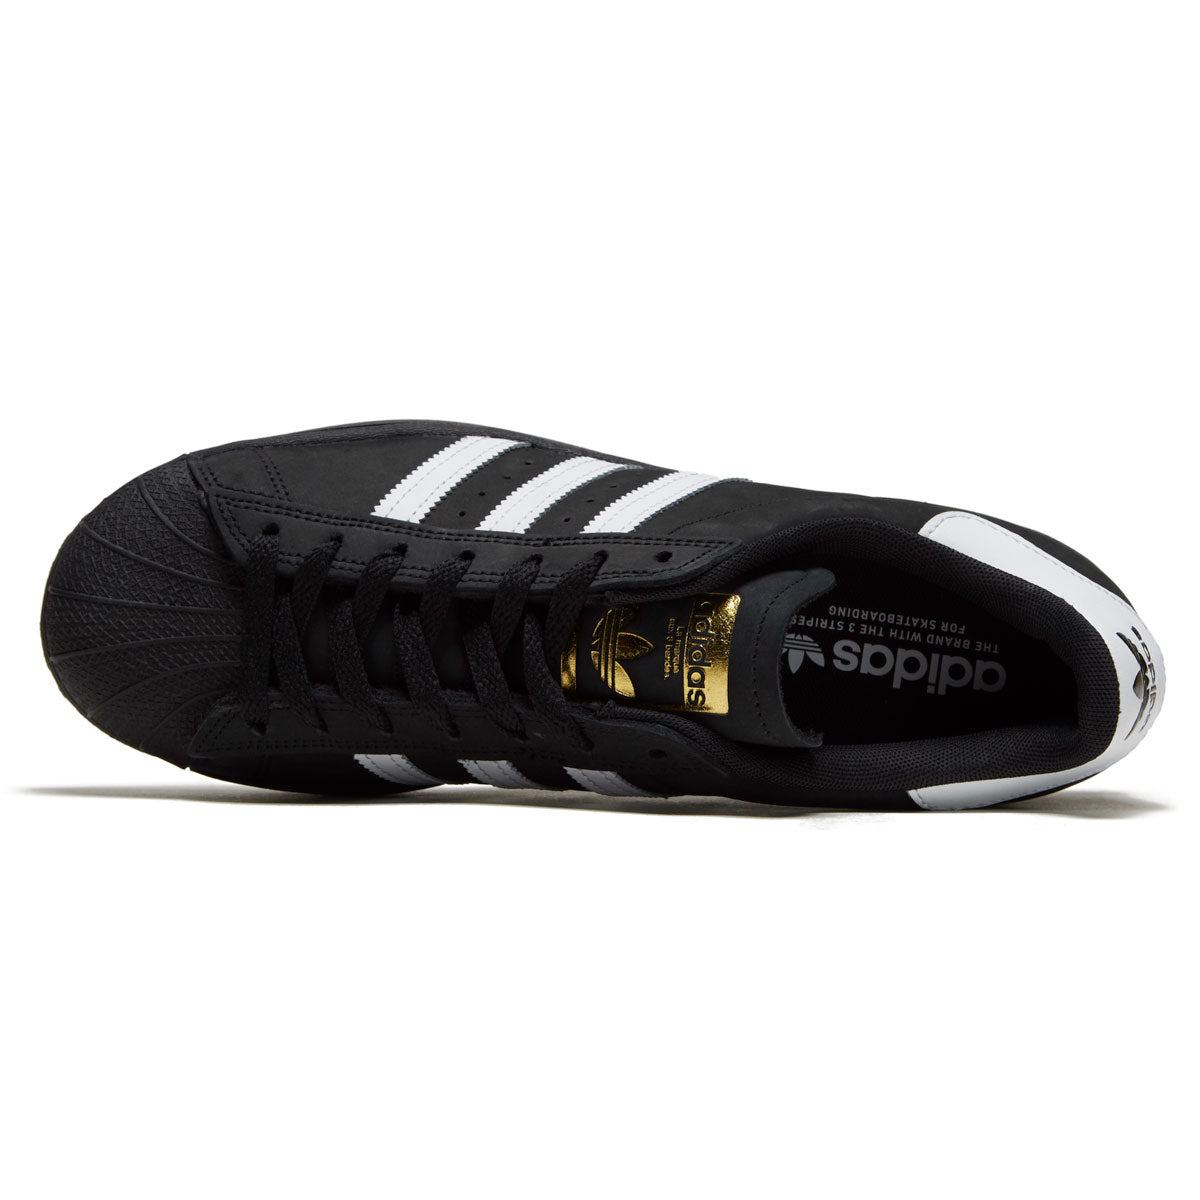 Adidas Superstar Adv Shoes - Black/White/Gold Metallic image 3